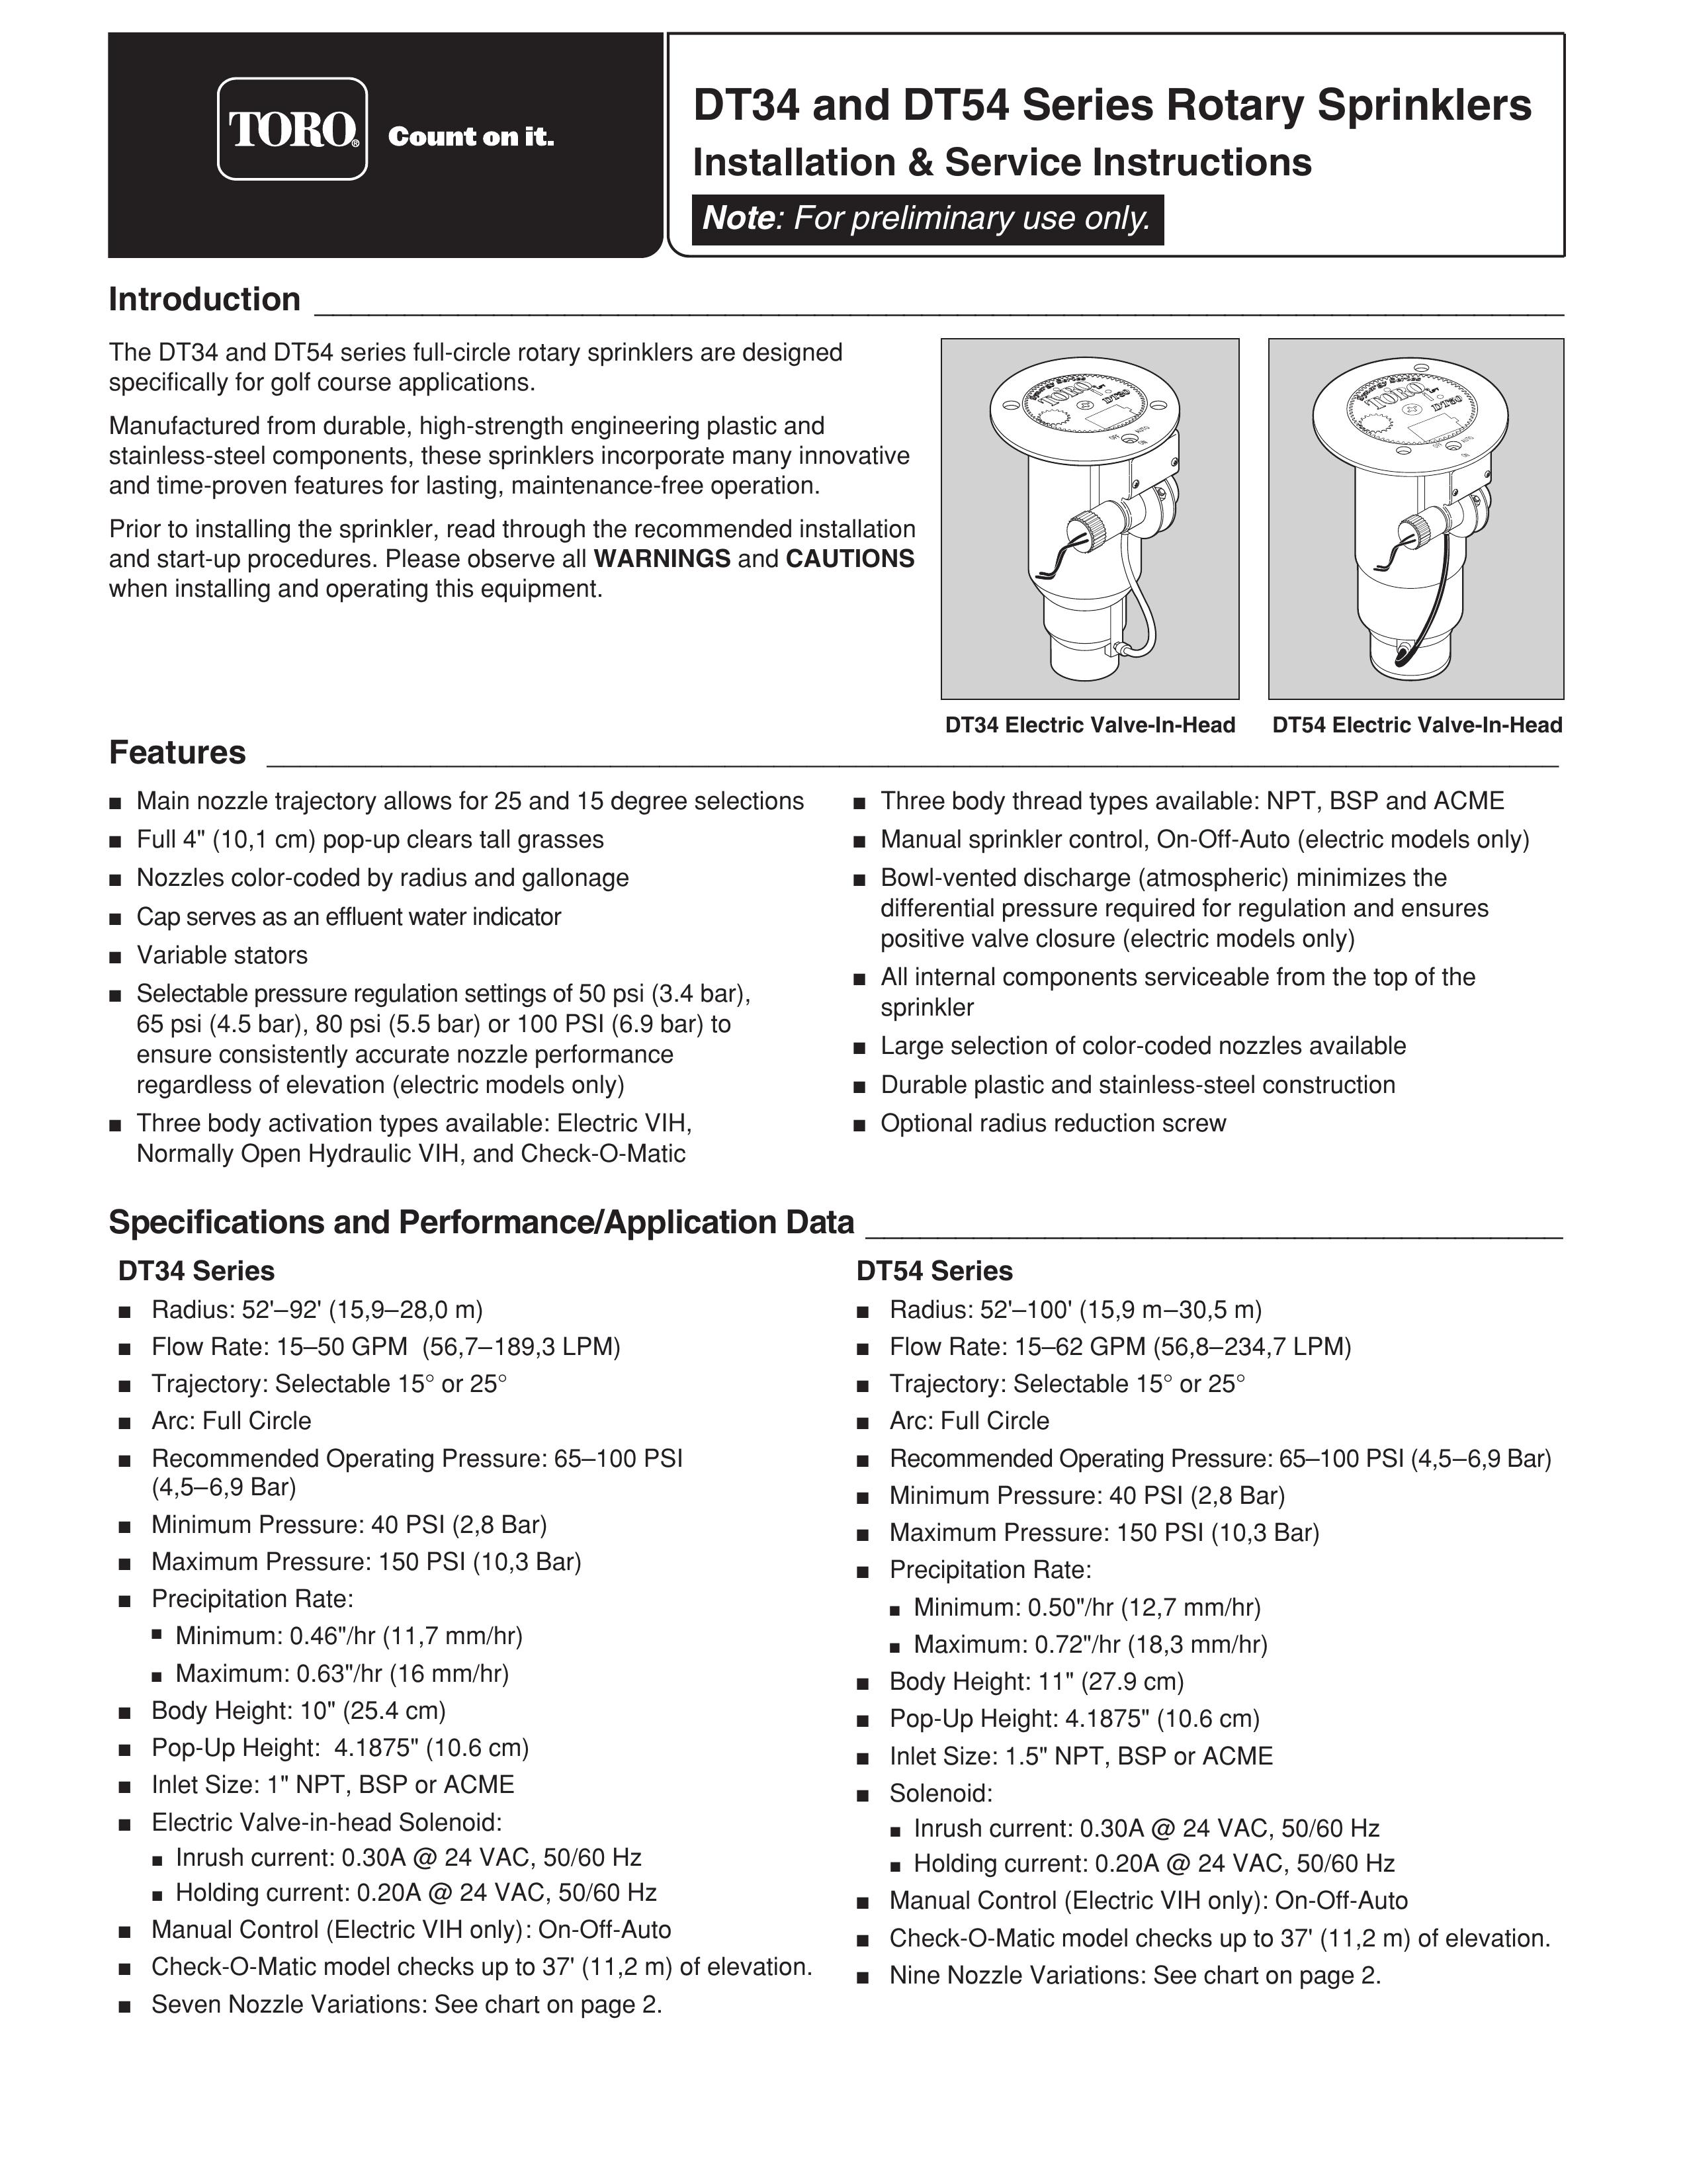 Toro DT54 Sprinkler User Manual